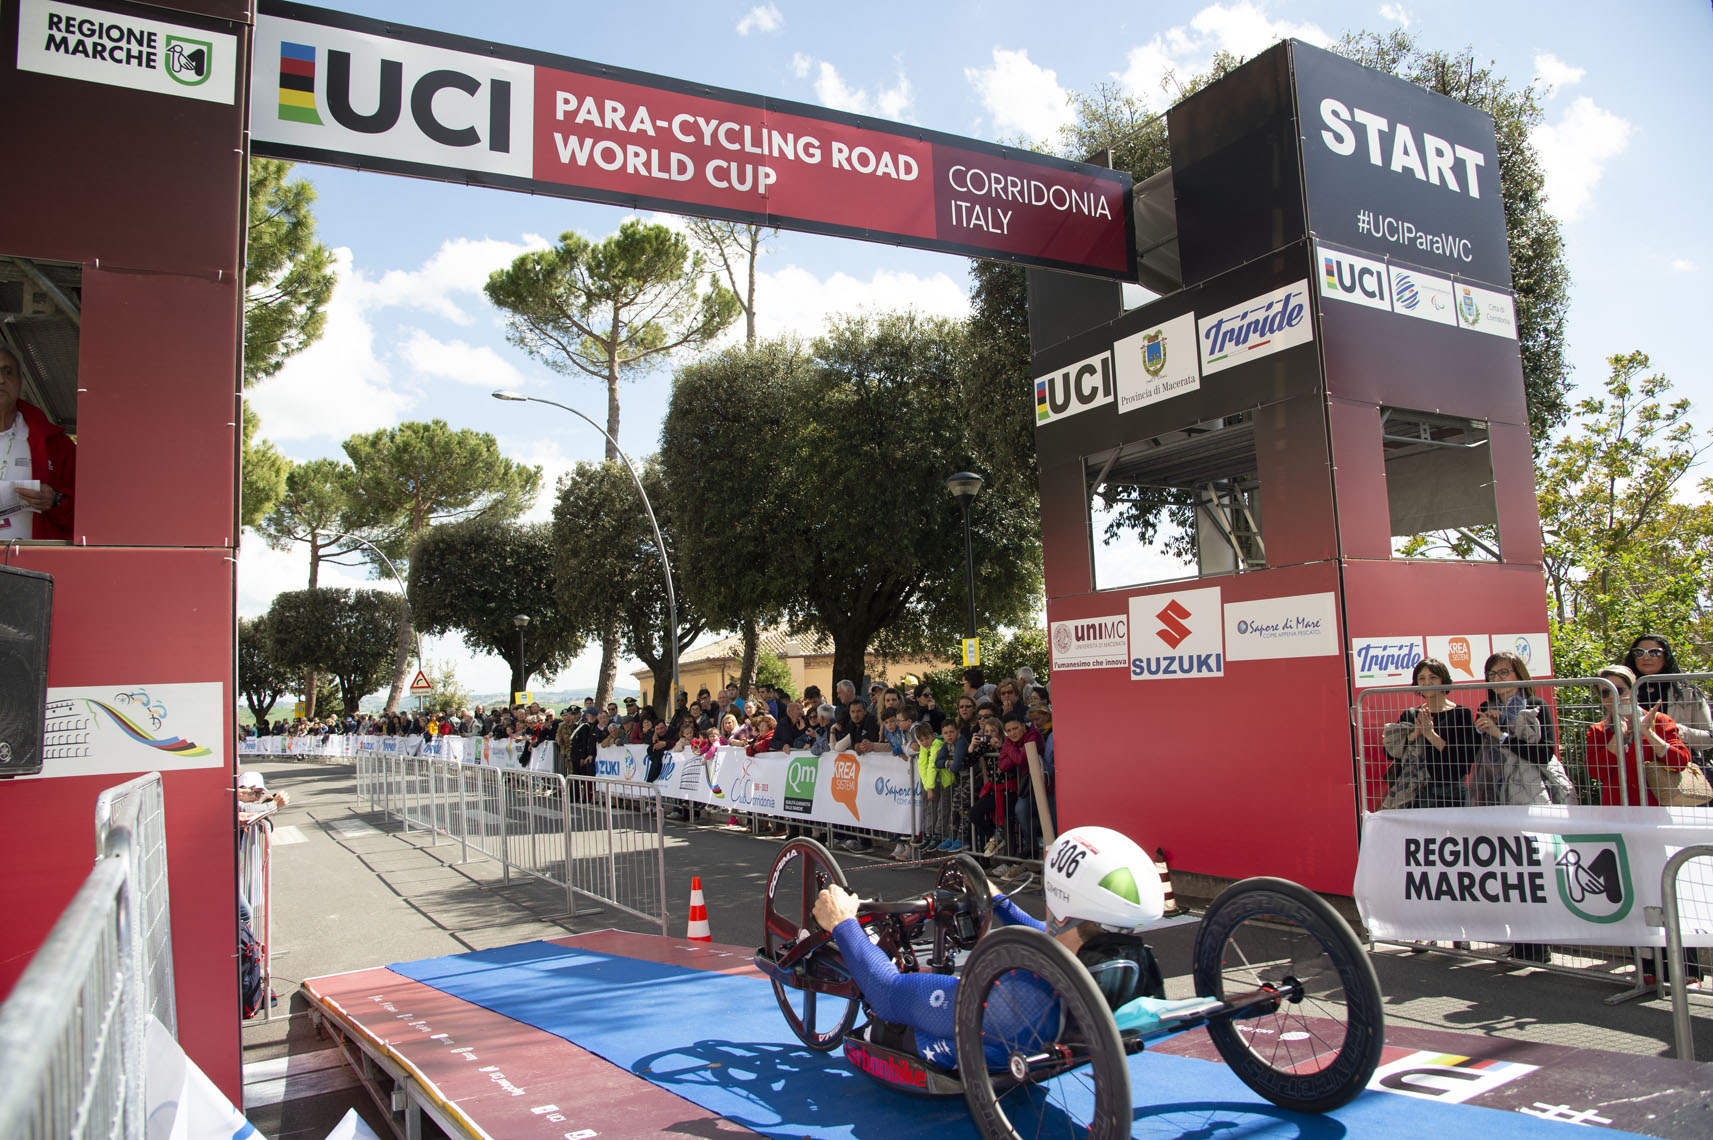 USA Startramp, UCI Paracycling World Cup, Corridonia, Italy